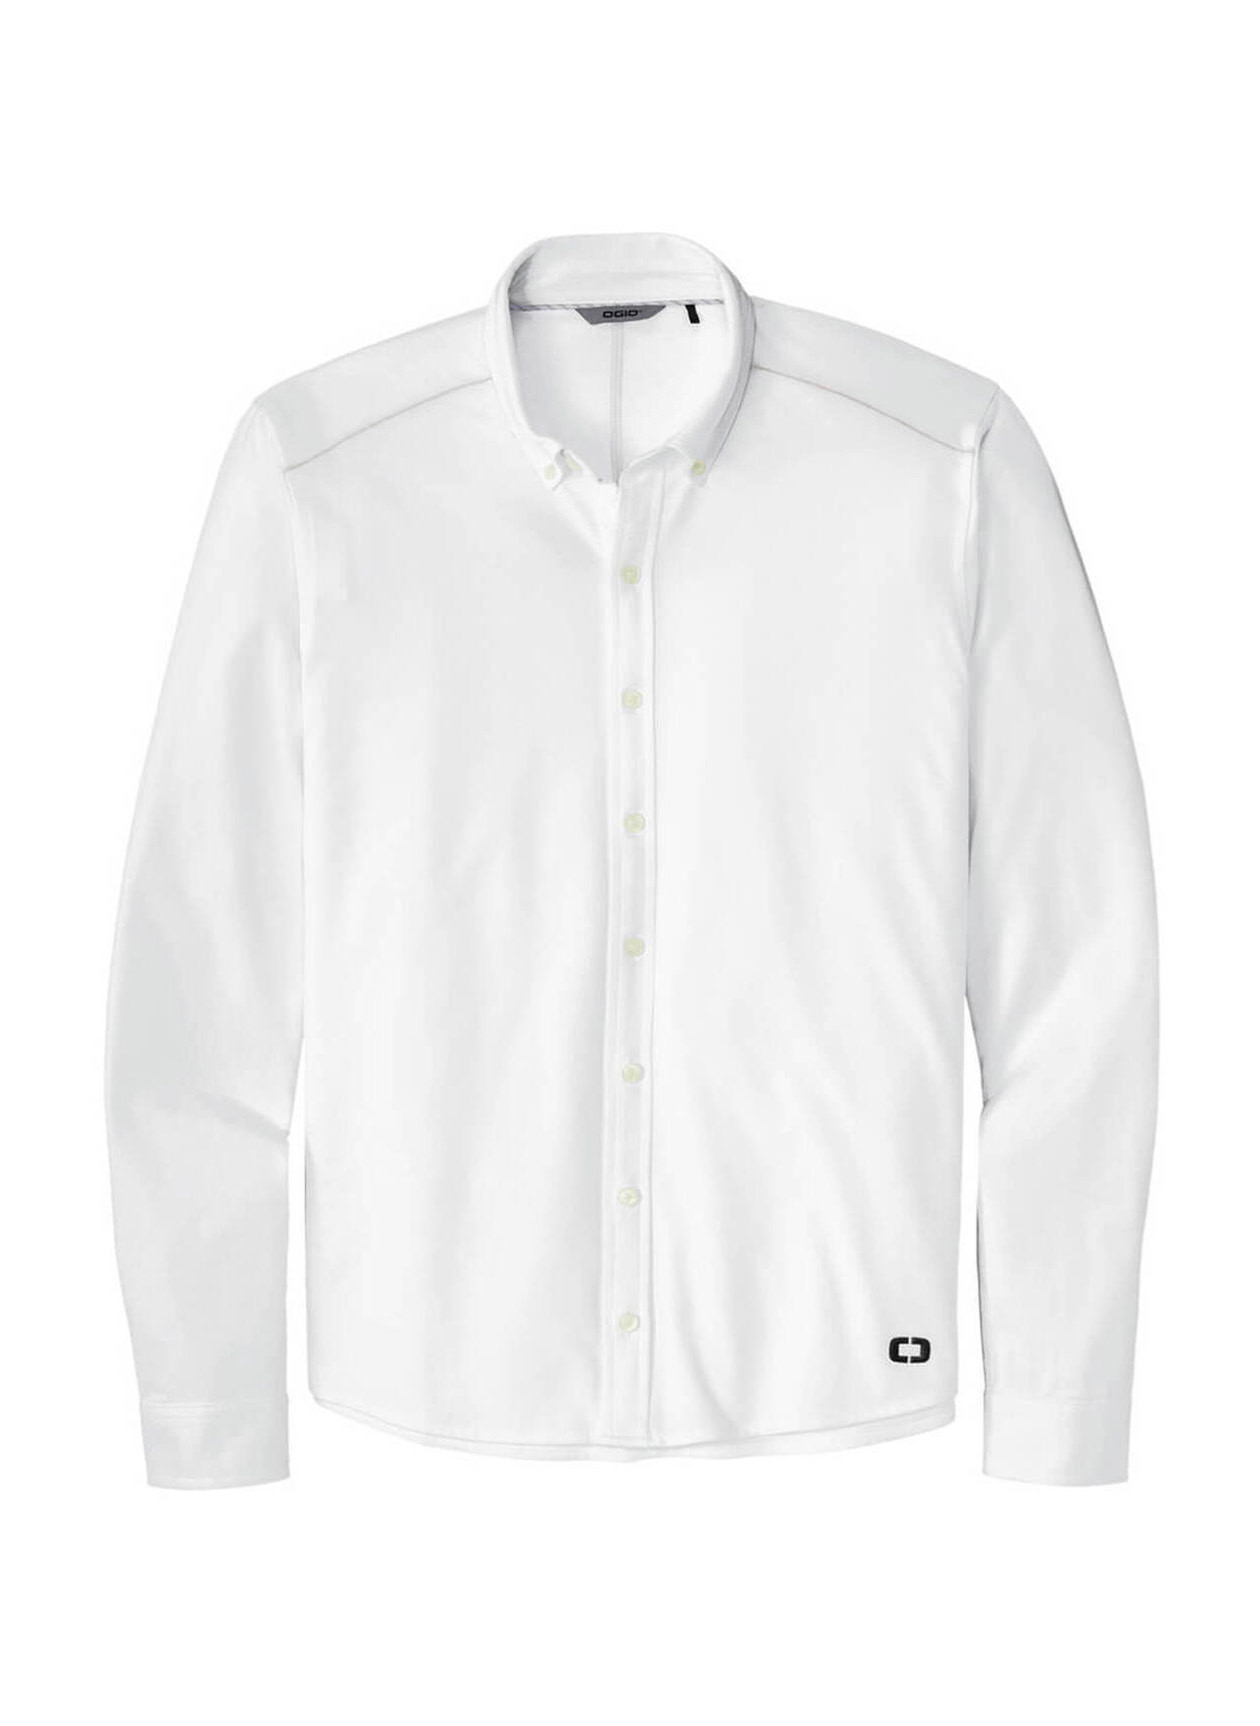 OGIO Men's Bright White Code Stretch Button-Up Shirt